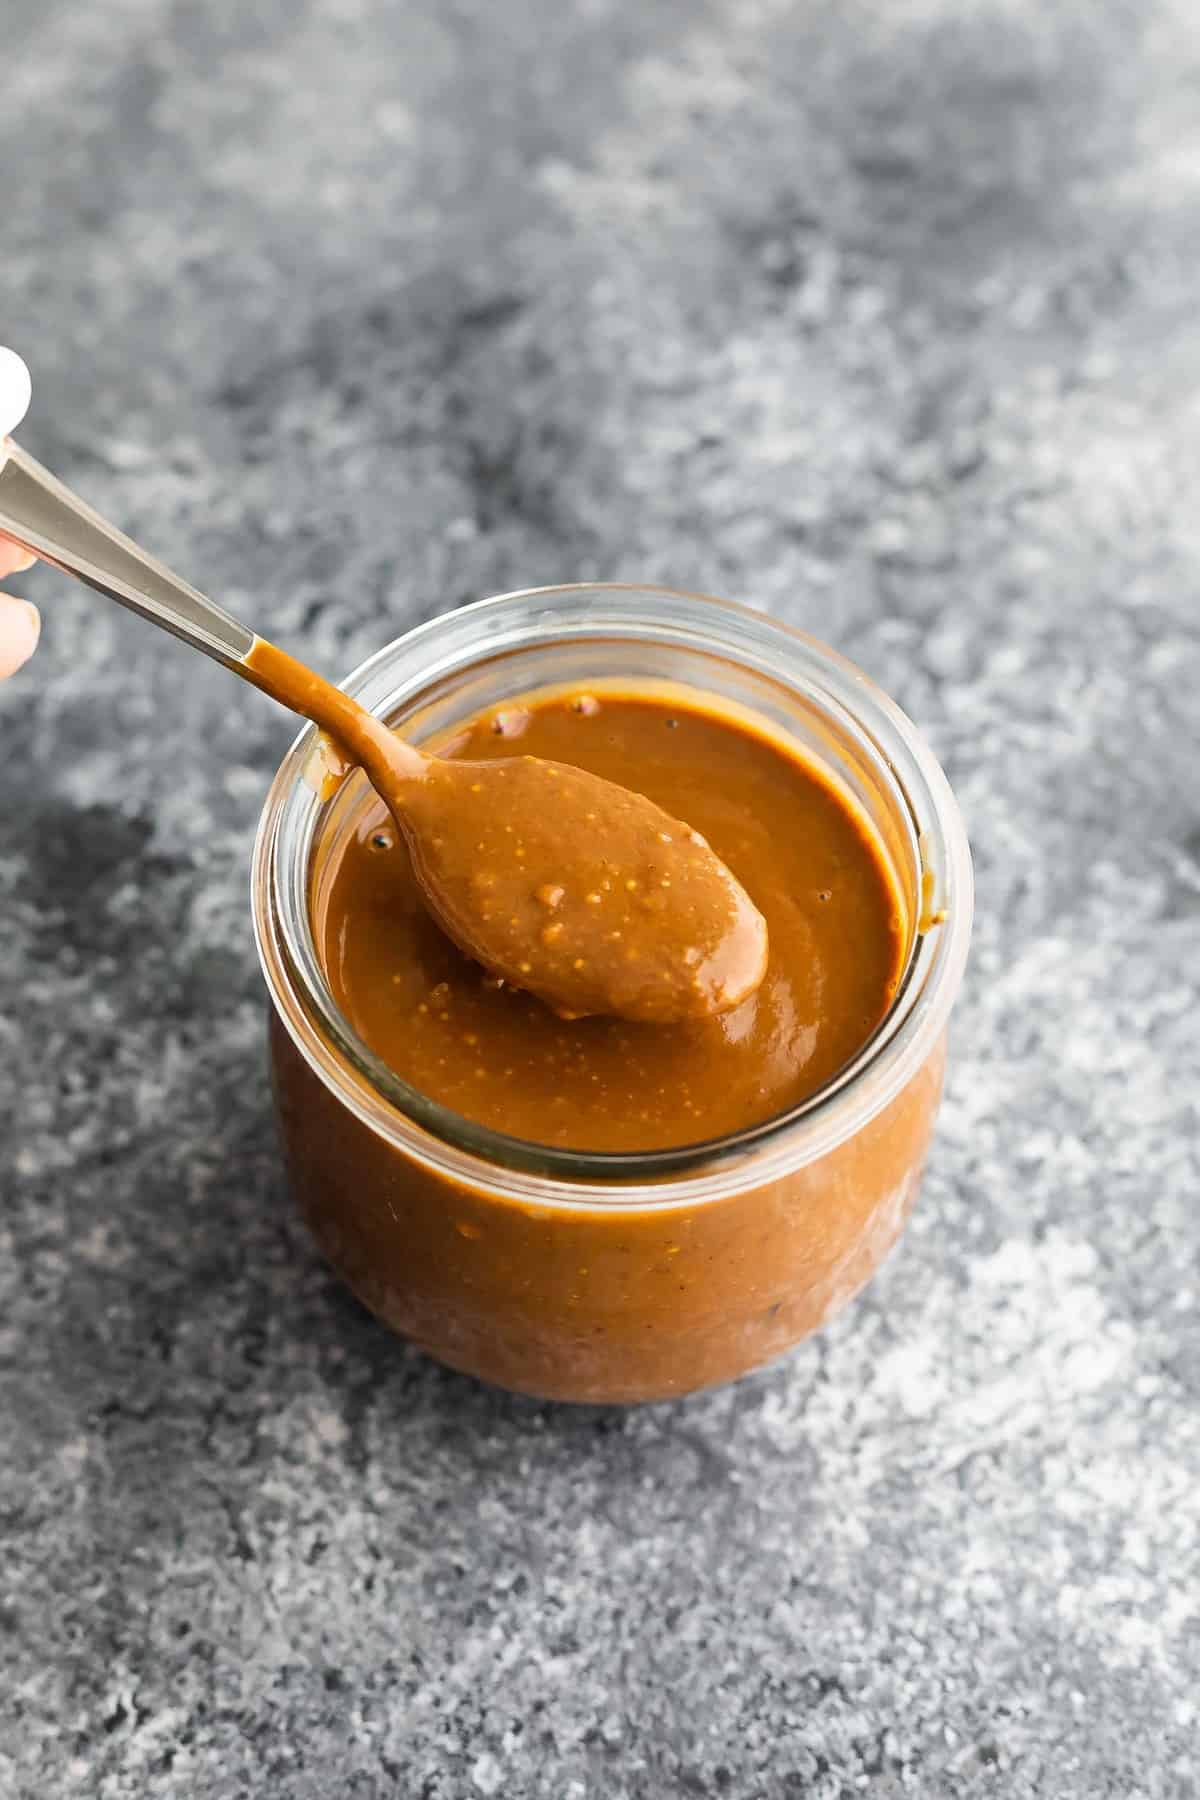 spoon showing texture of peanut sauce in jar